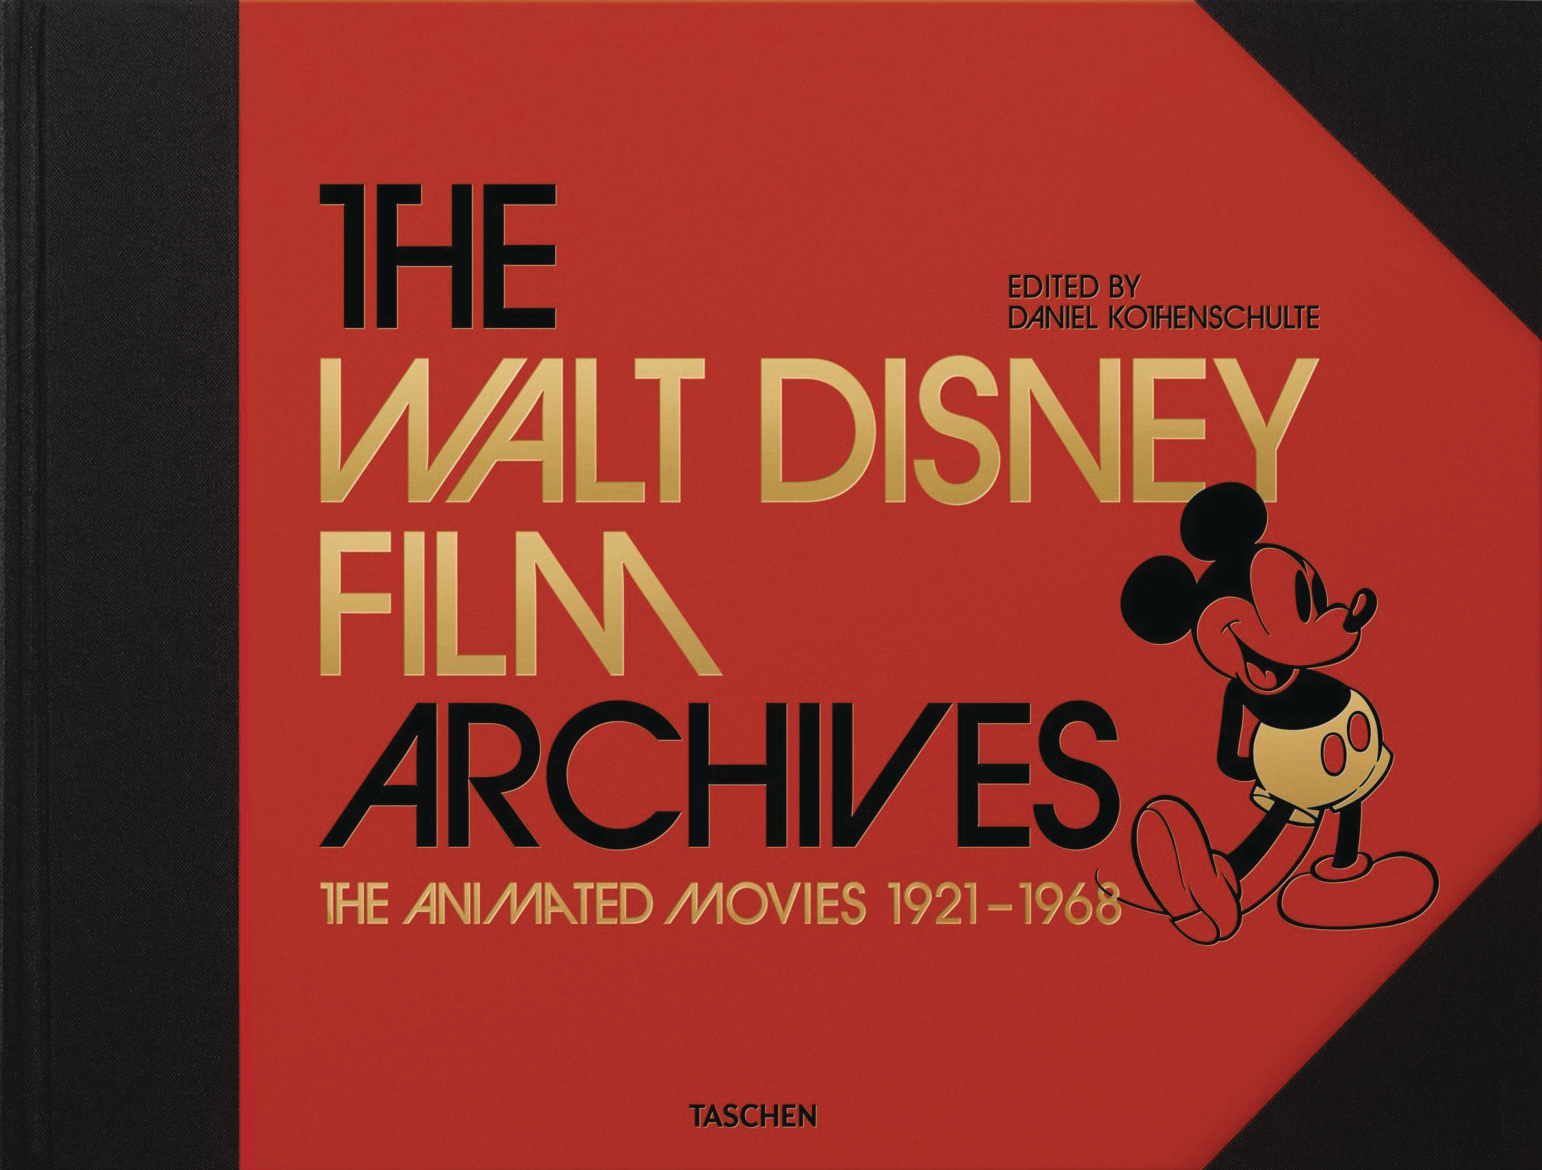 Walt Disney Film Archives Animated Movies 1921-1968 Hardcover